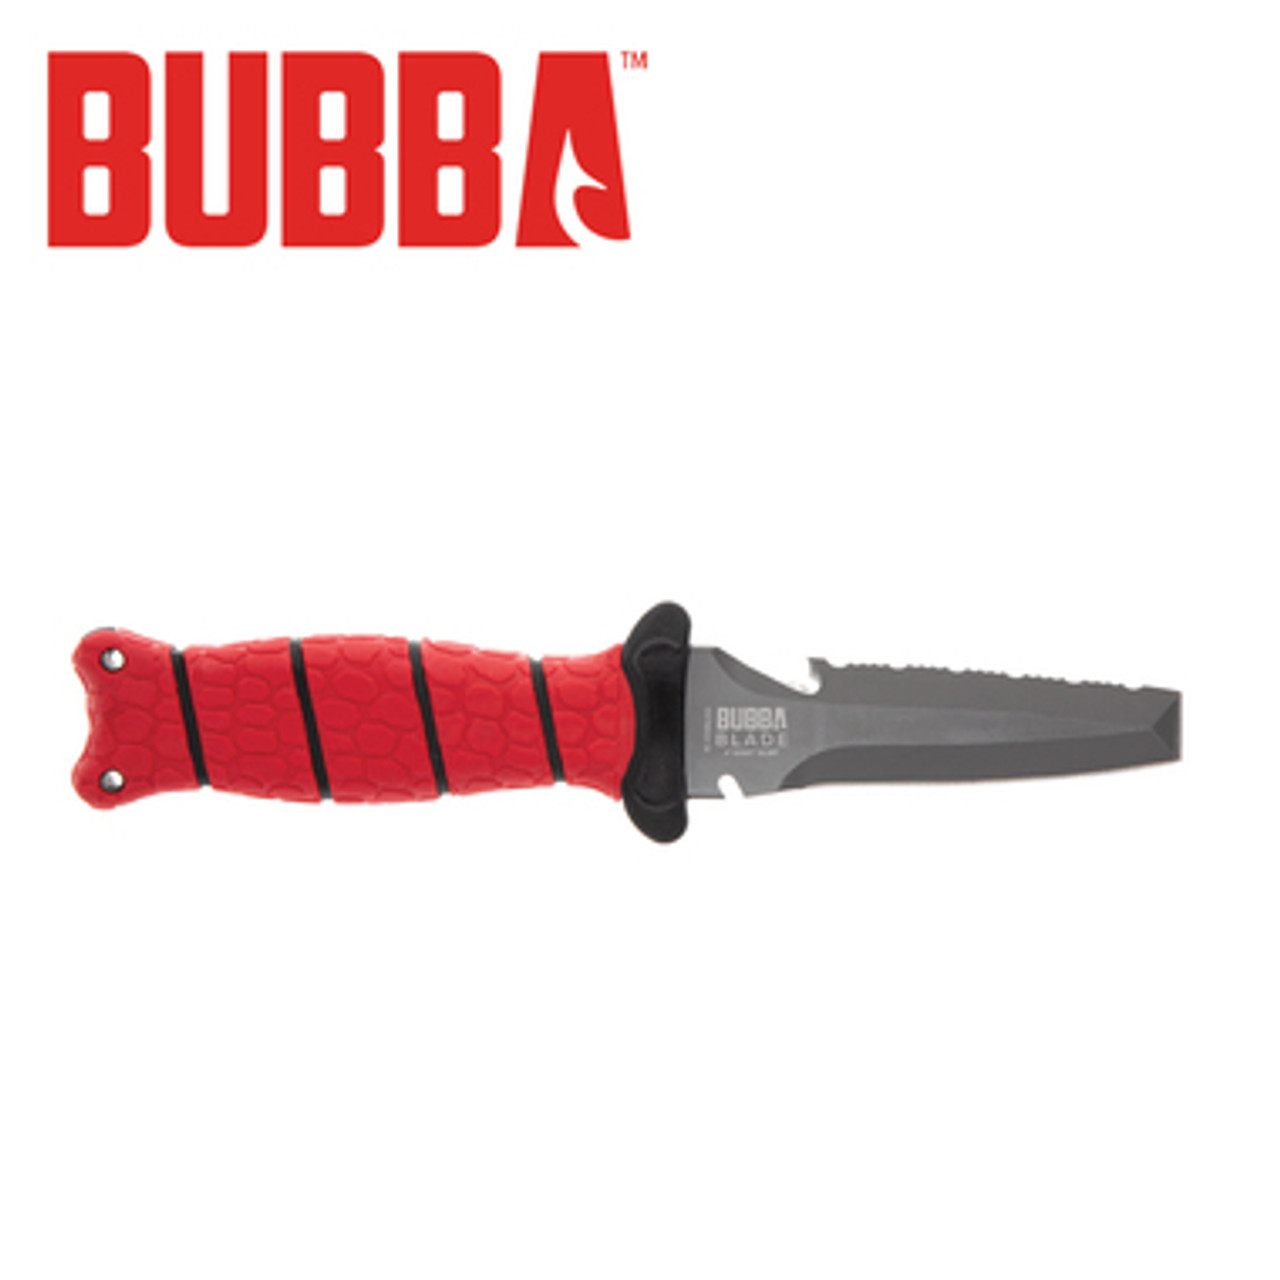 Bubba 4 Blunt Scout knife